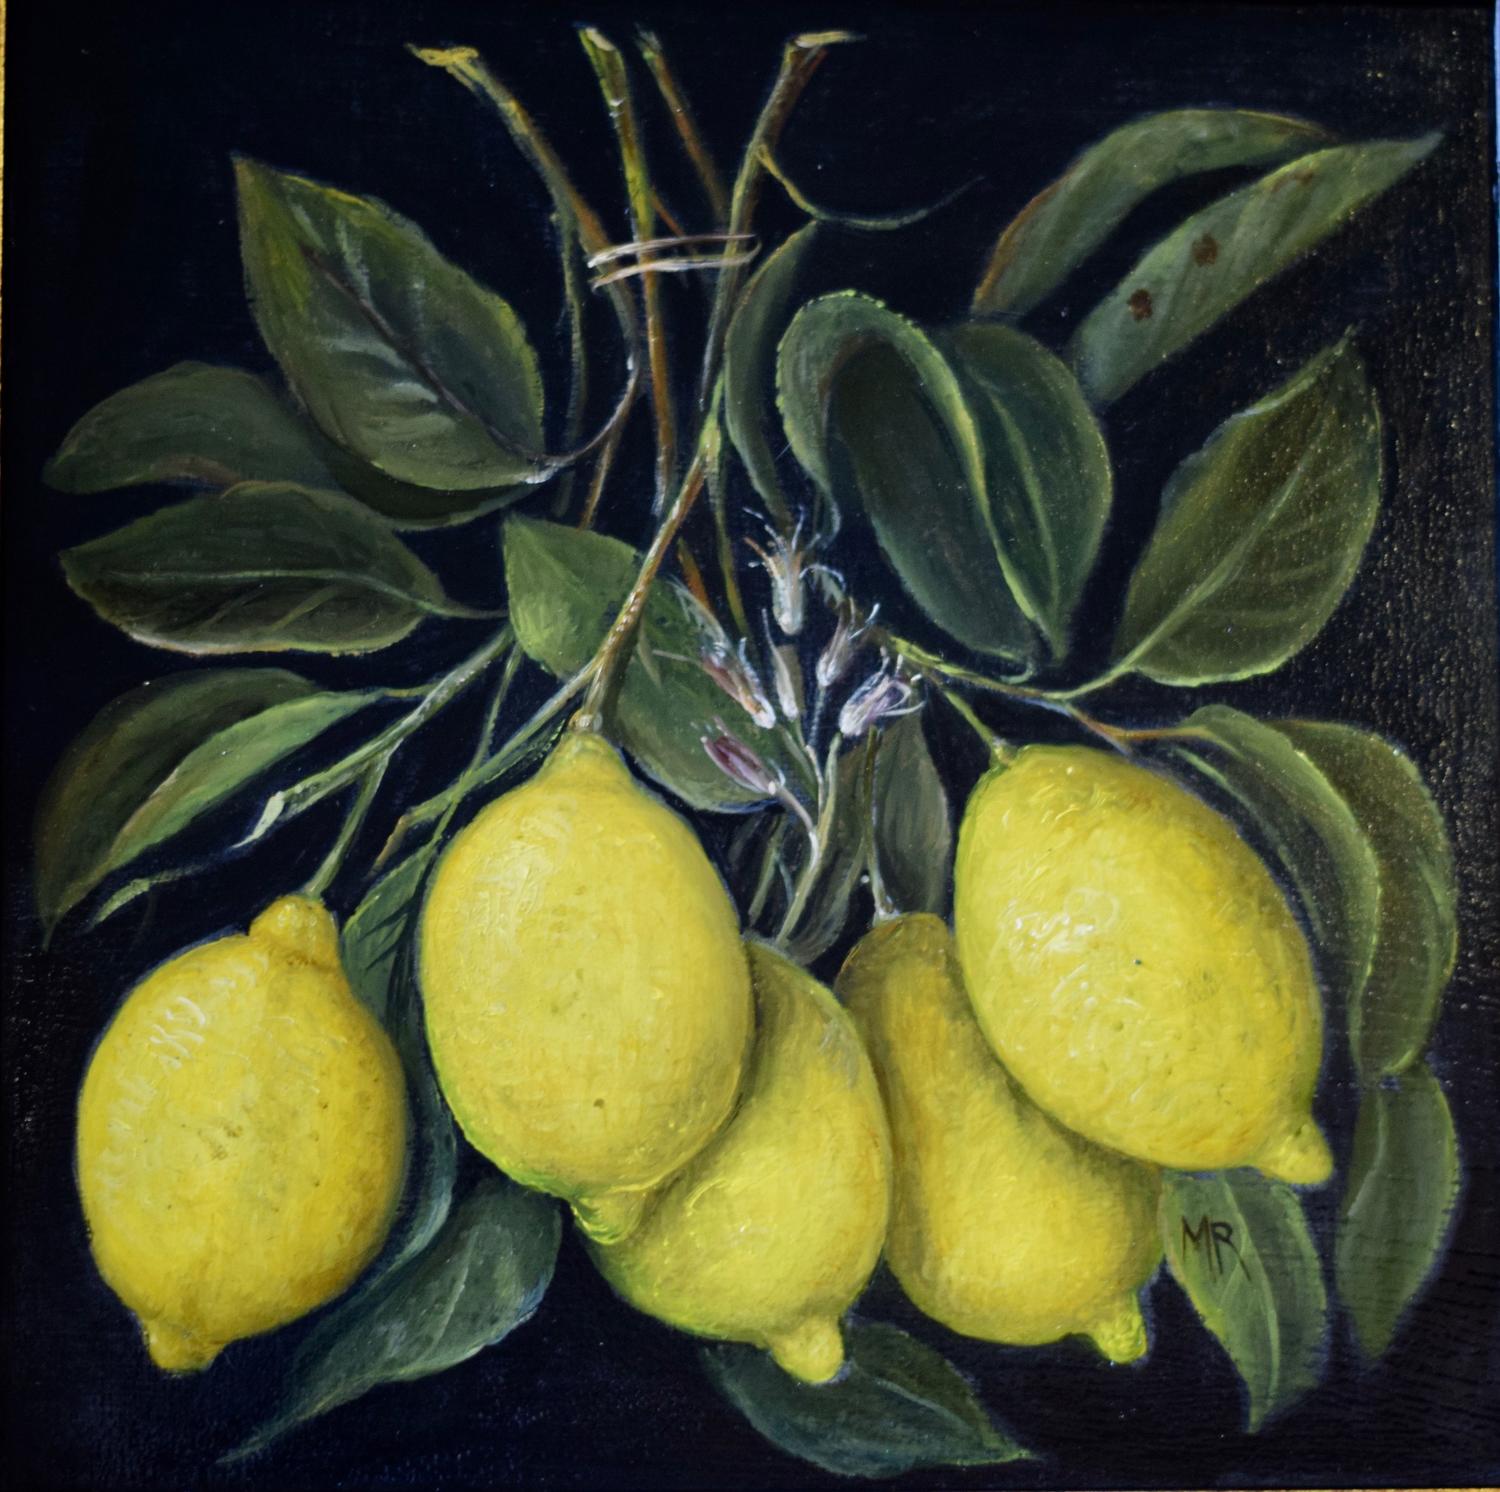 Branches of lemons.